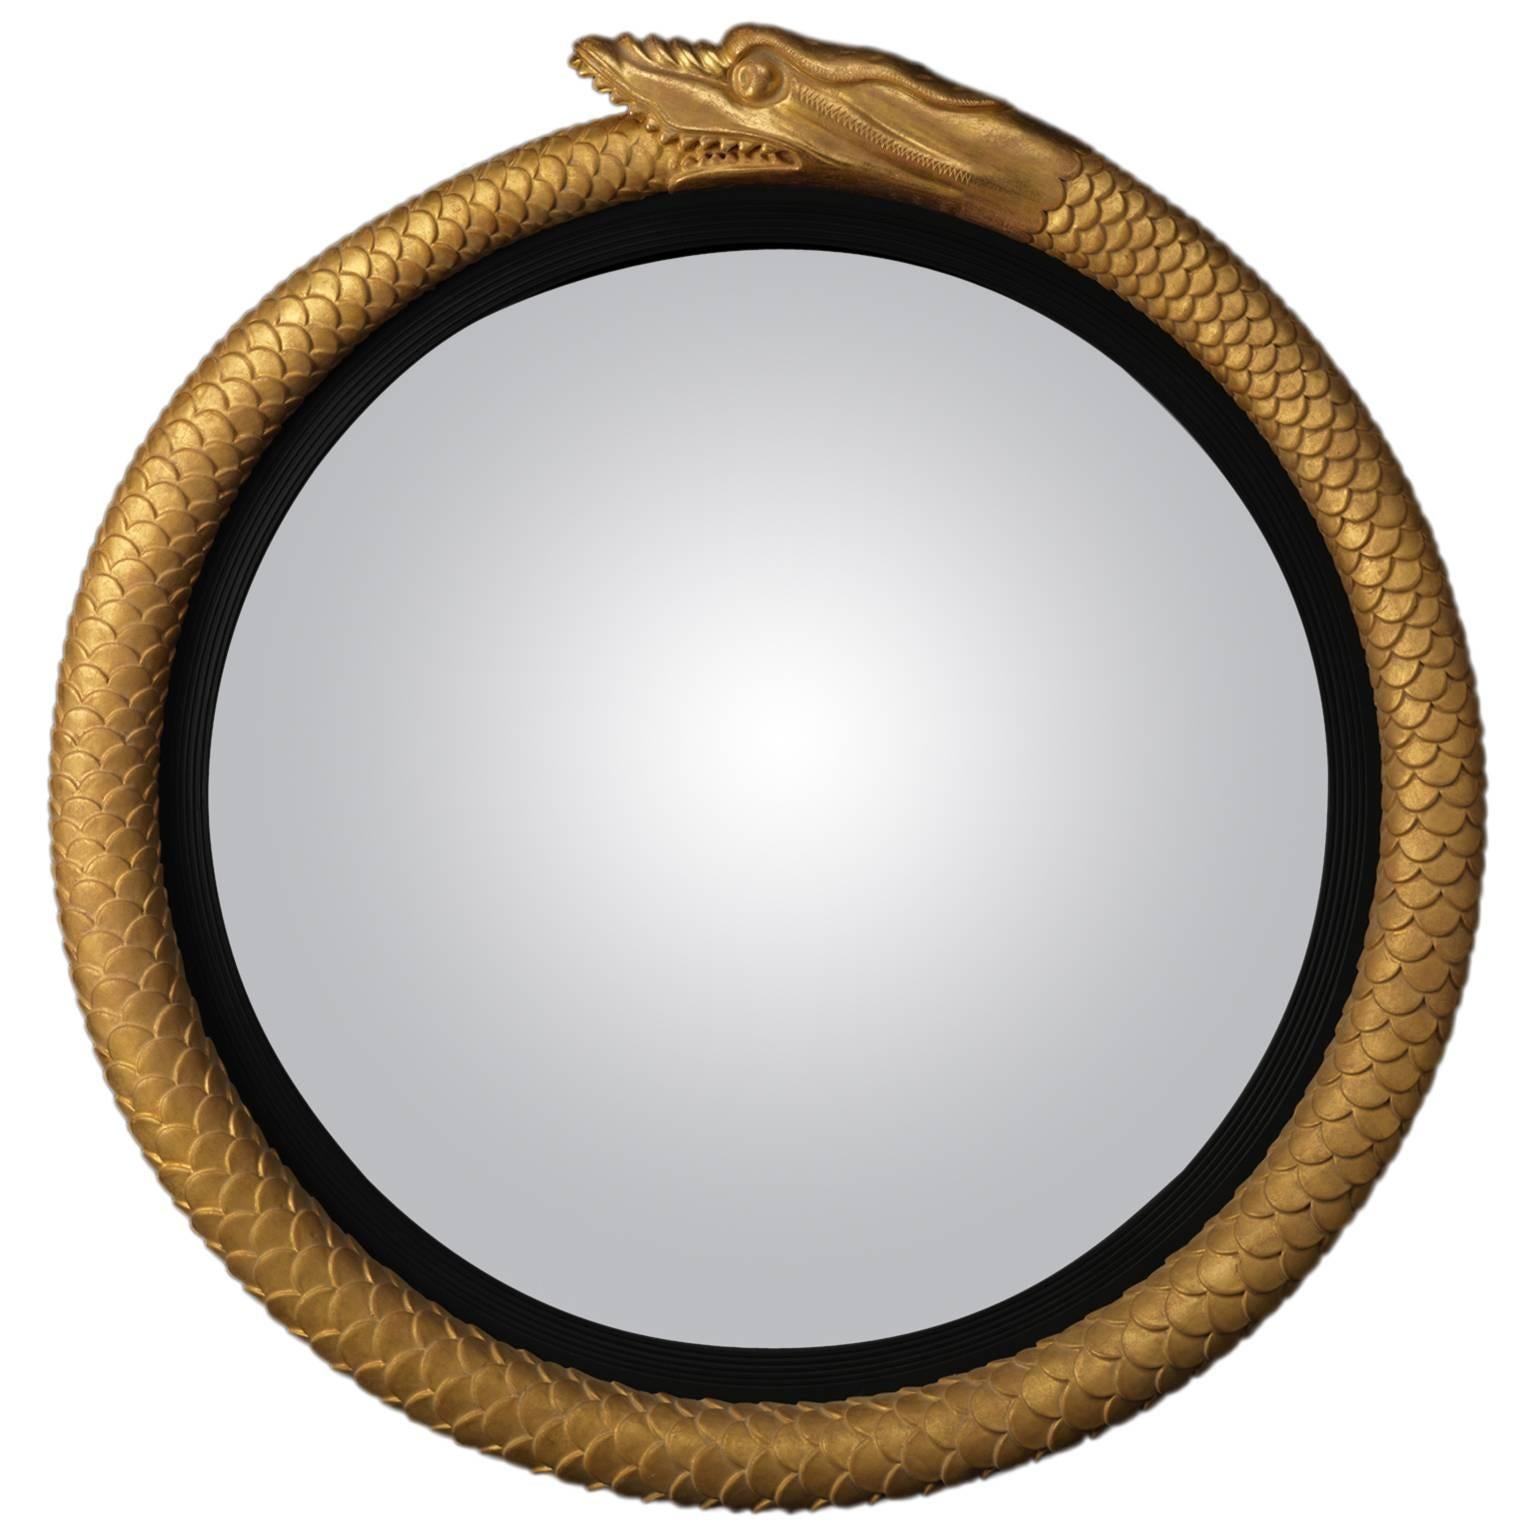 Serpent Convex Mirror in the Regency manner